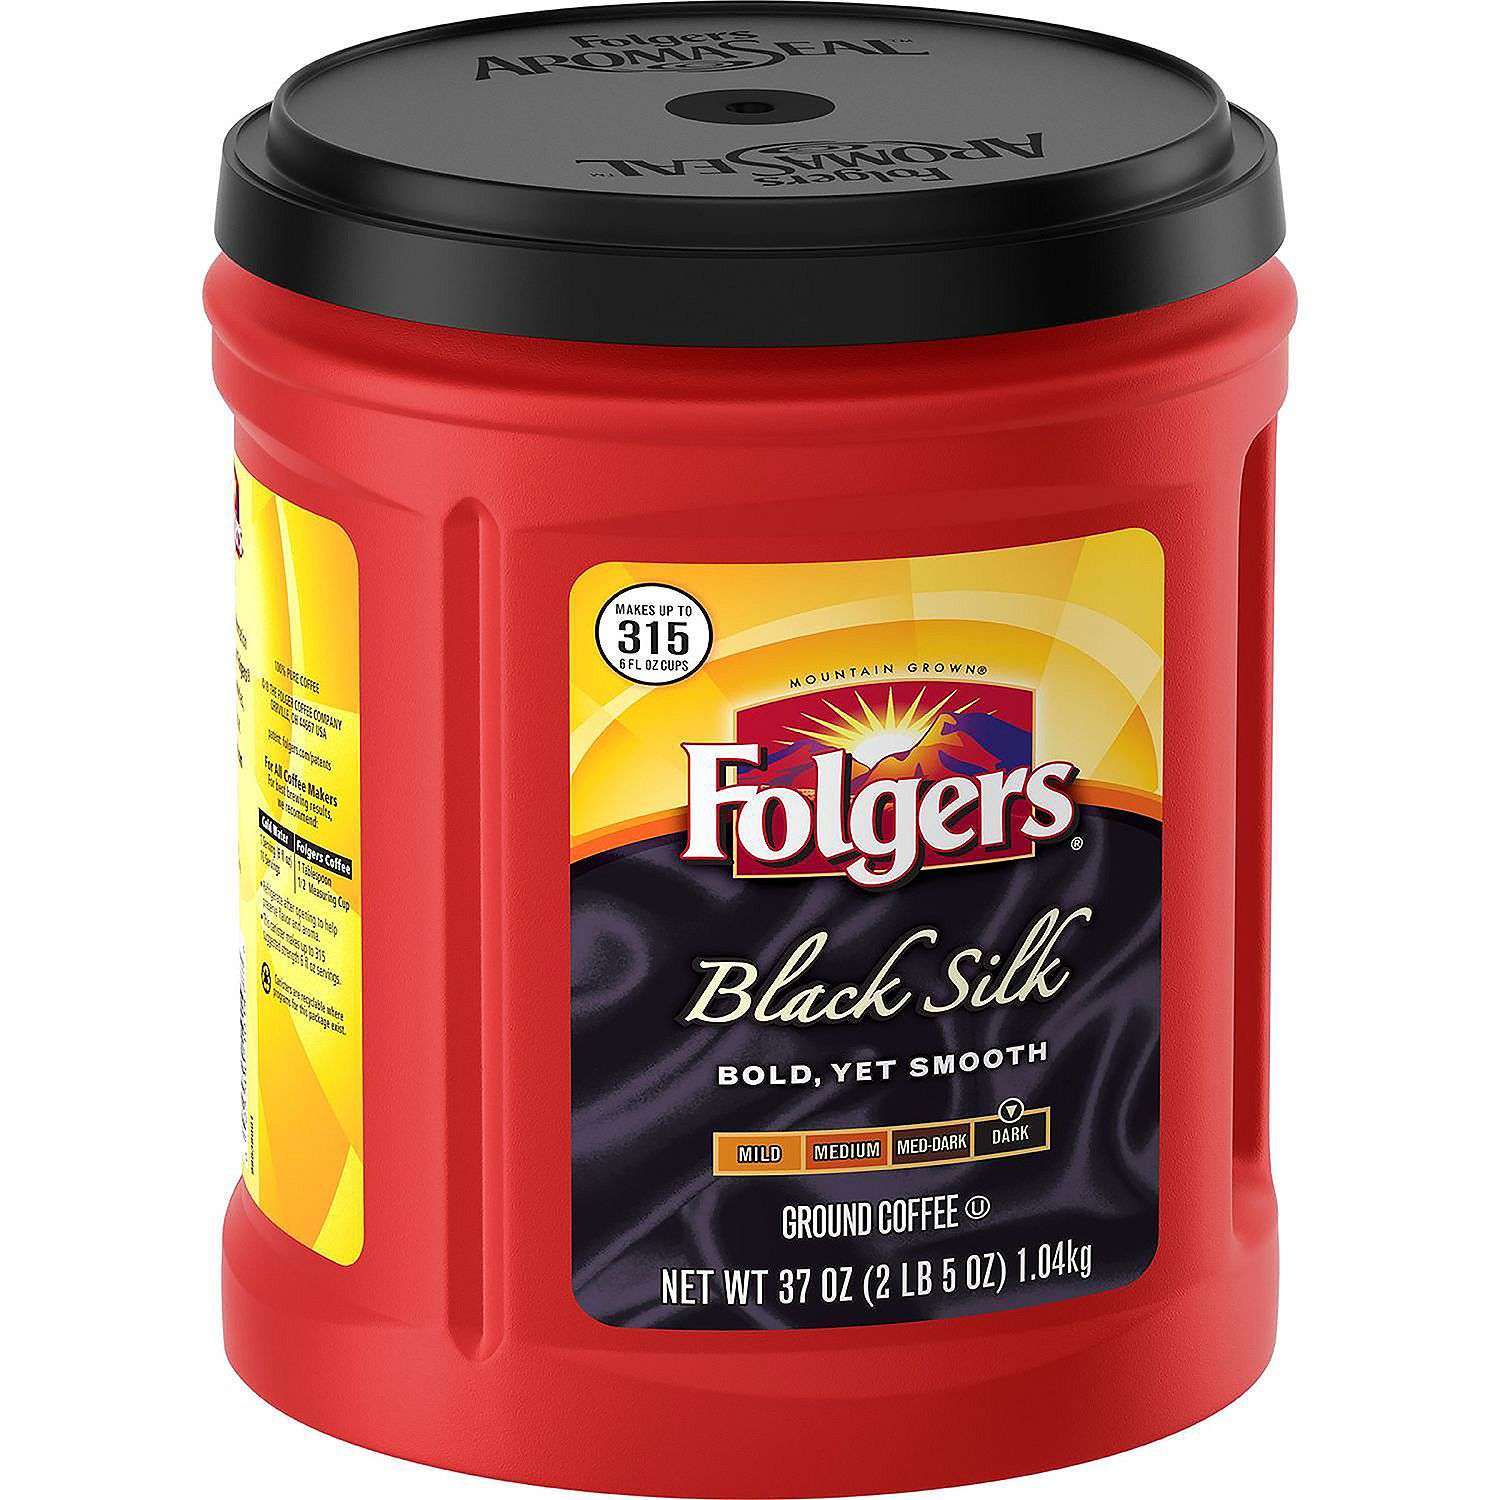 Folgers Black Silk Coffee (37 oz.)